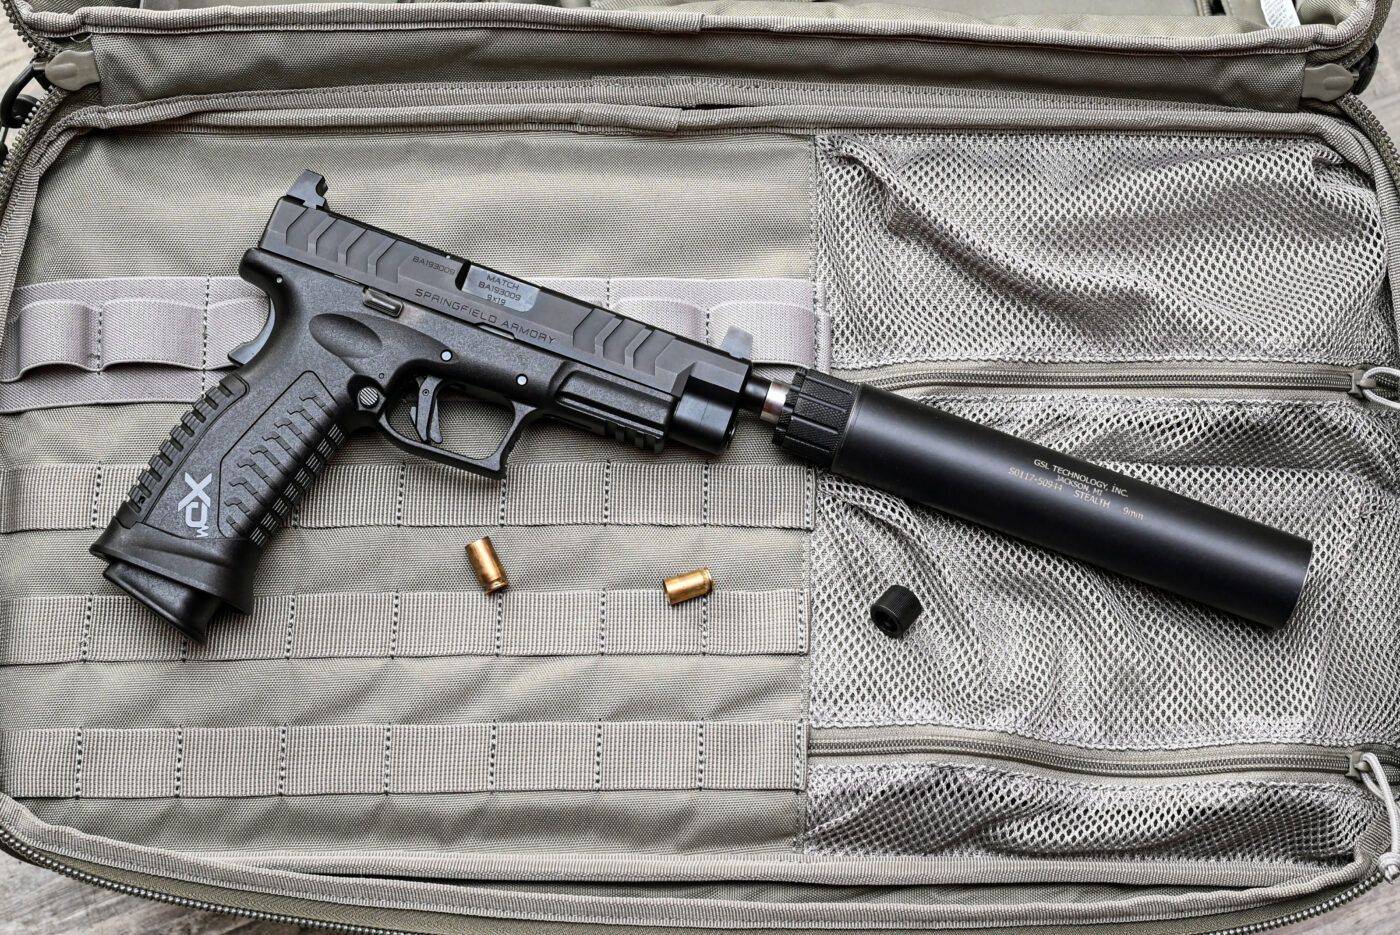 GSL noise suppressor mounted to Springfield XD-M Elite pistol